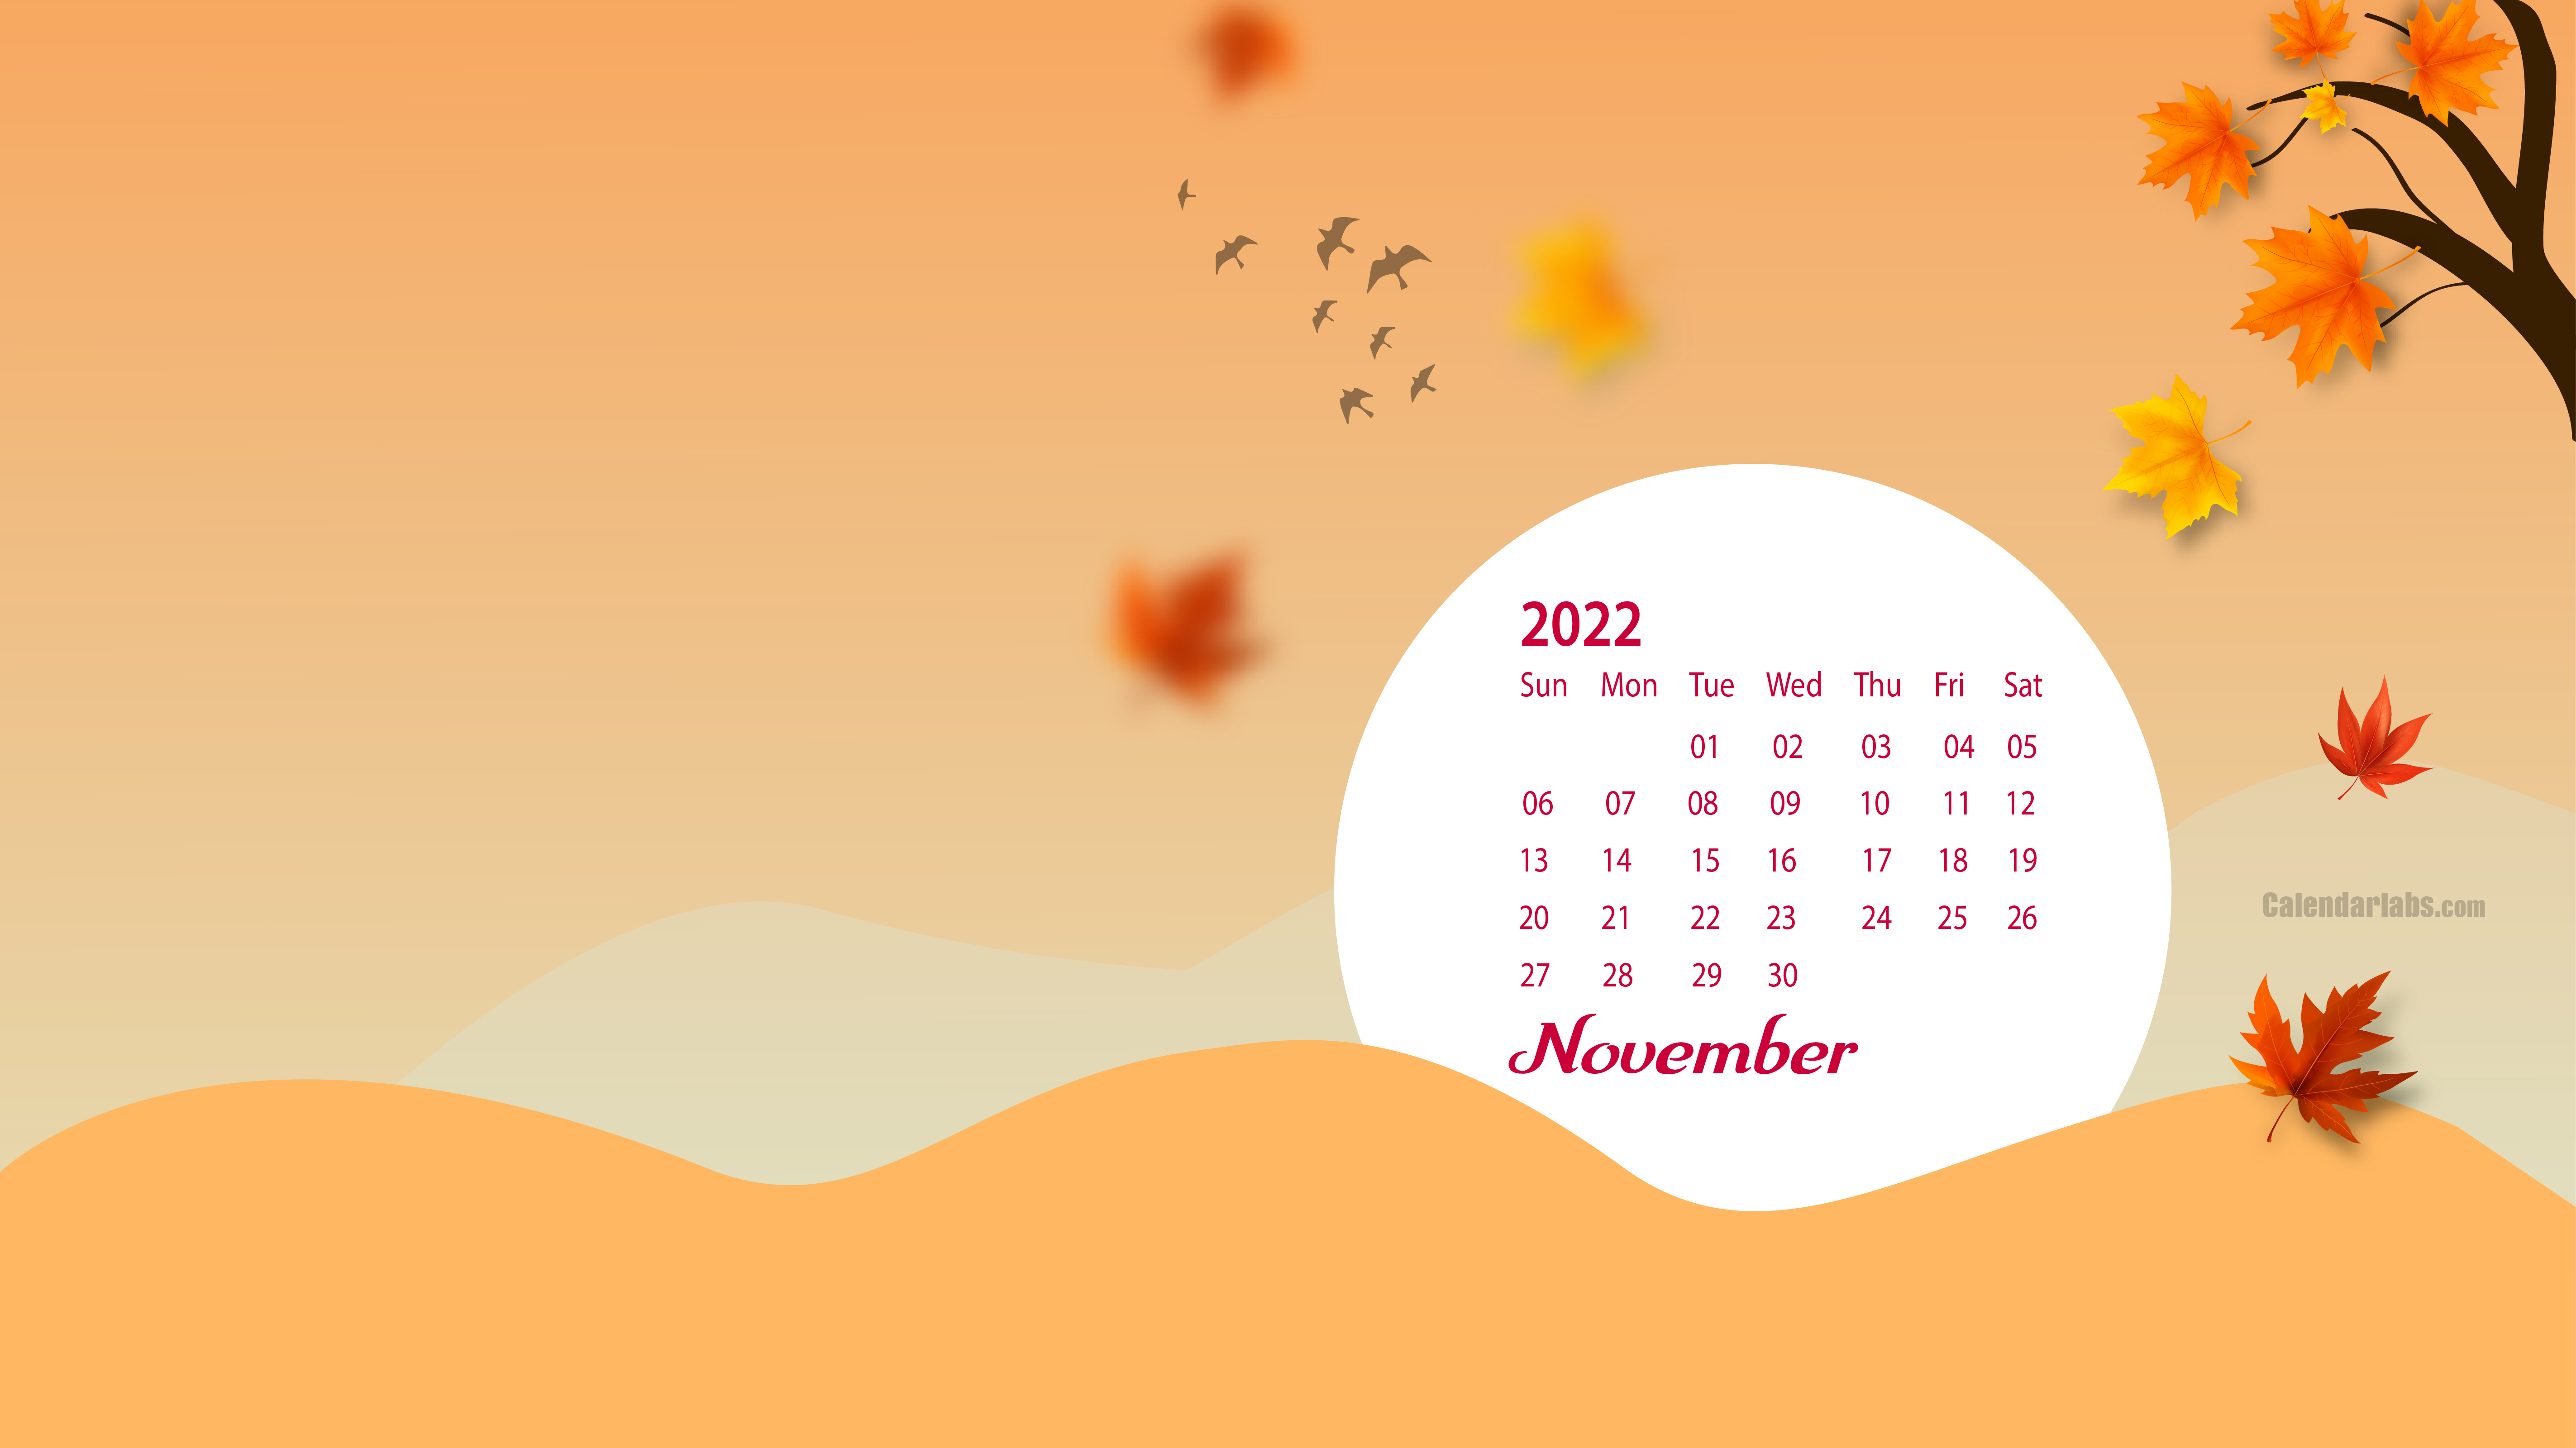 November 2022 Desktop Wallpaper Calendar - CalendarLabs